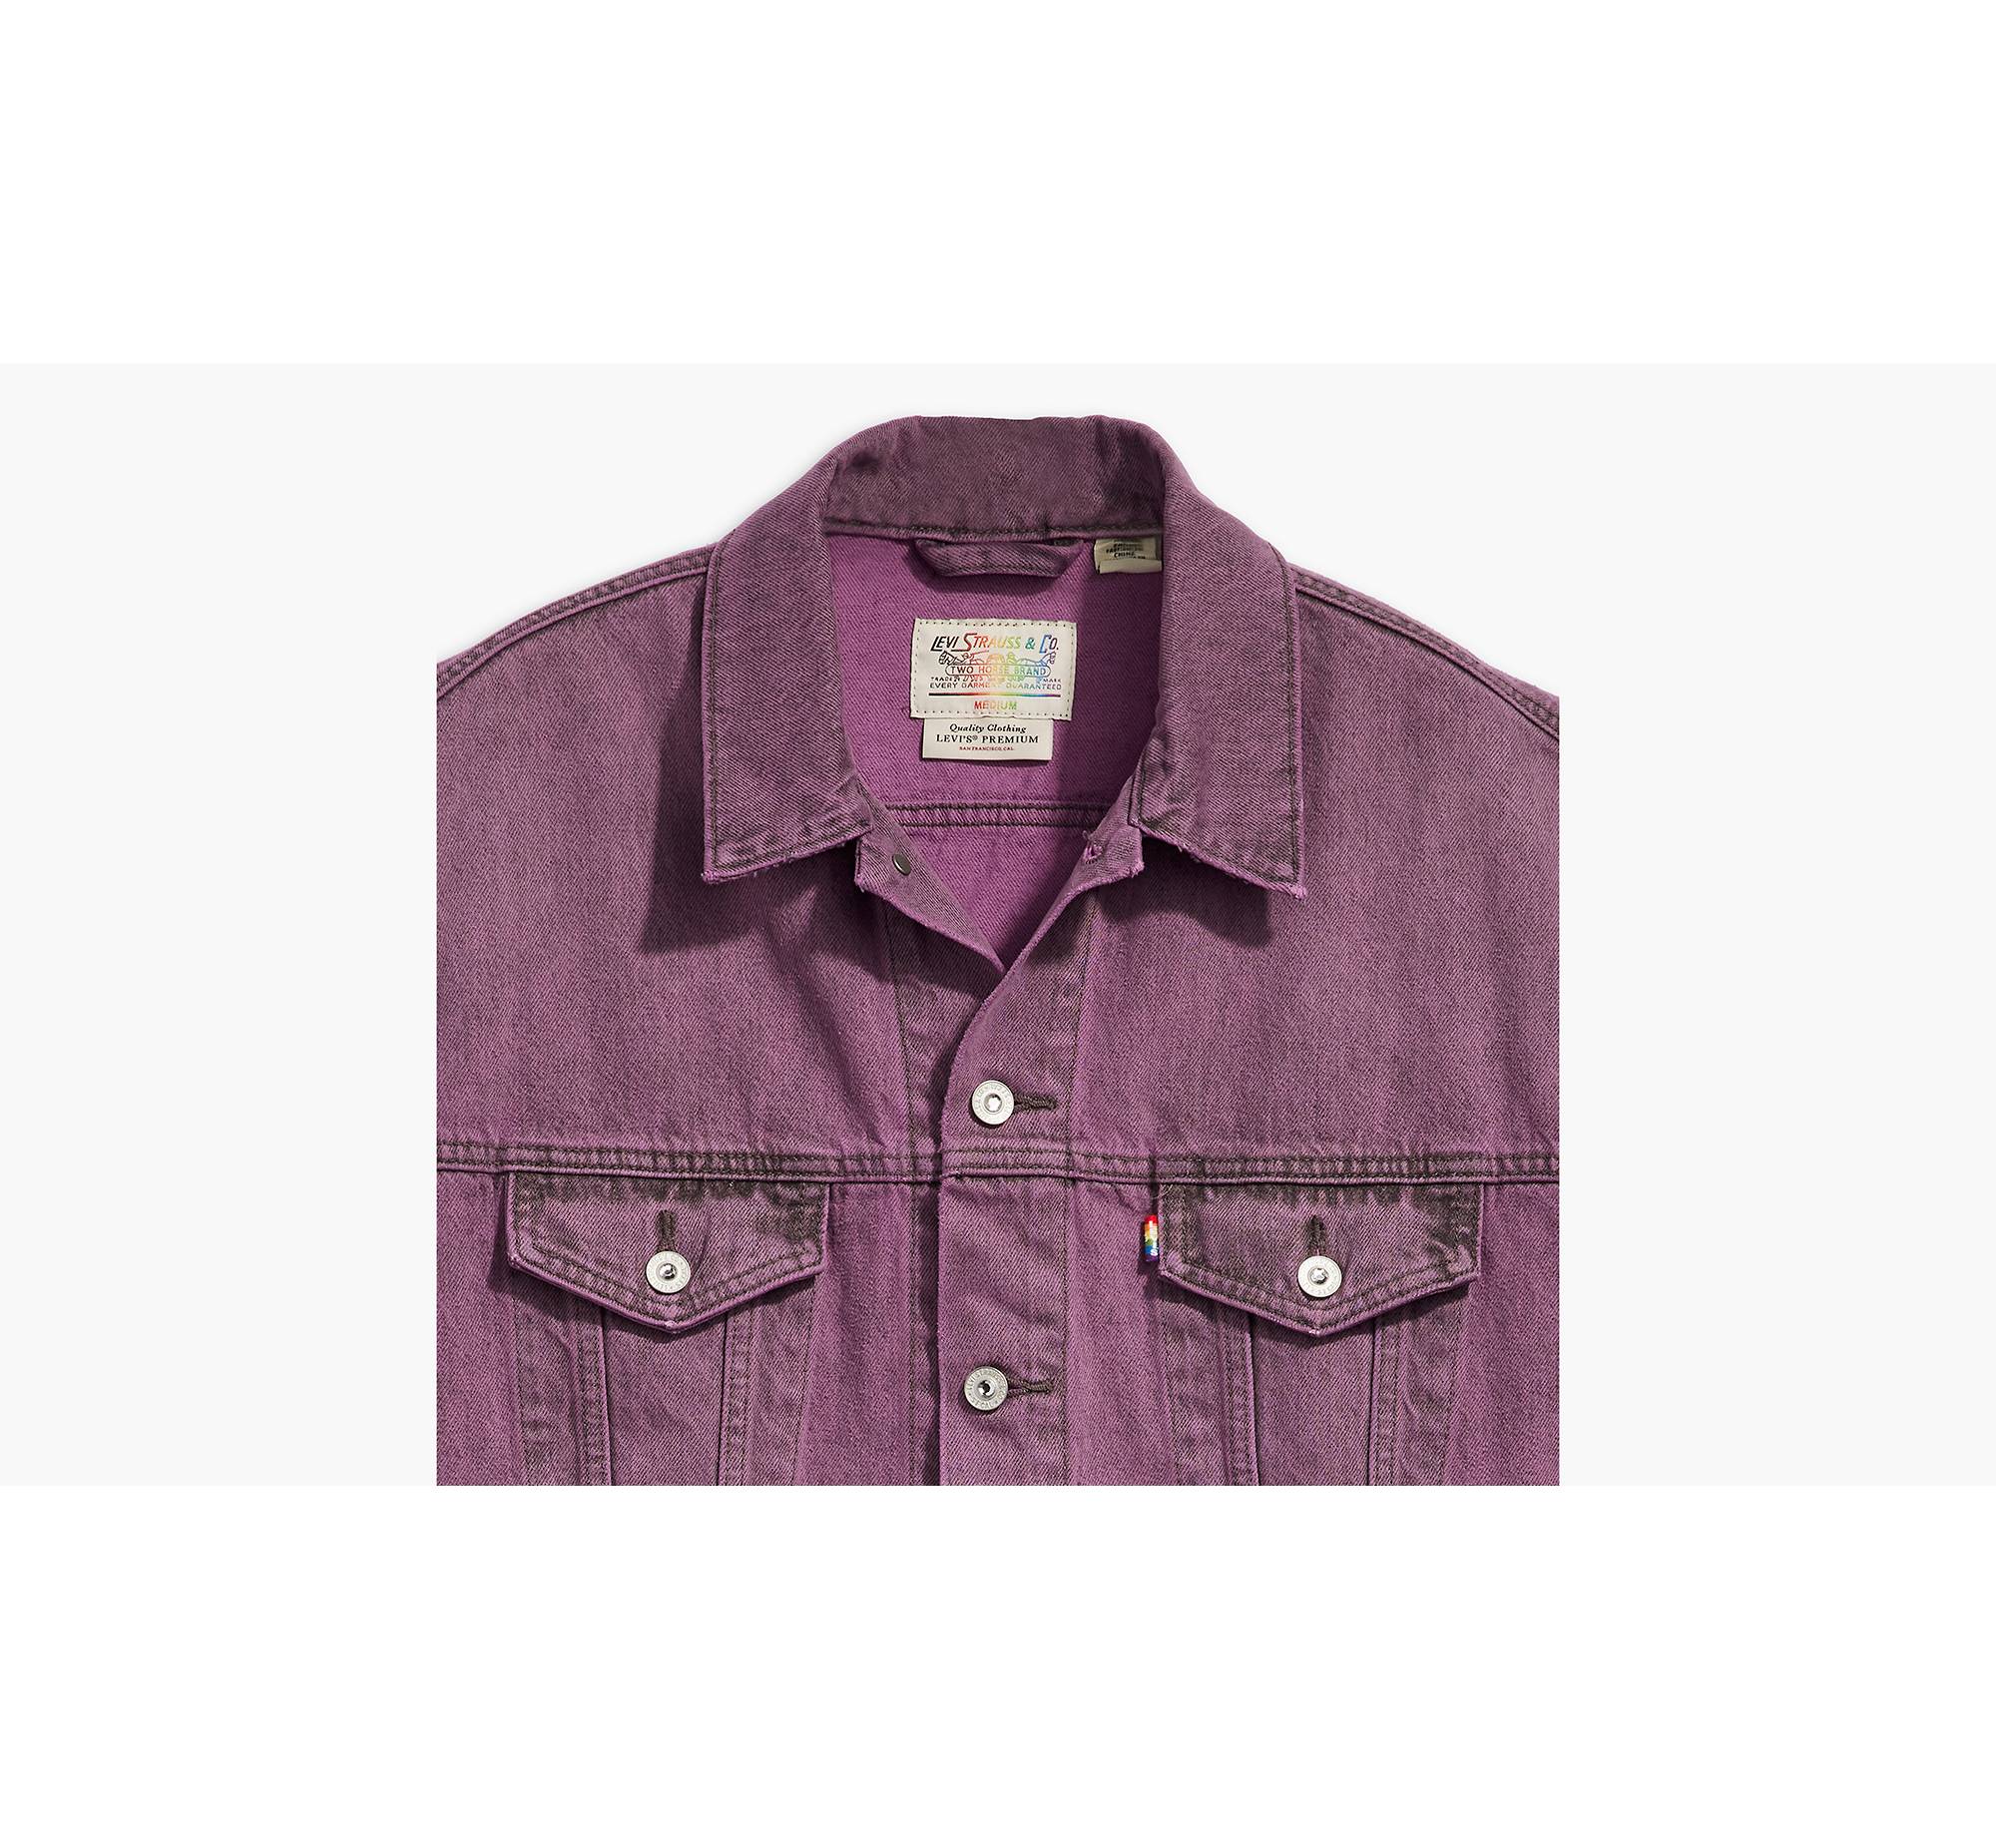 Levi's Purple Denim Jacket